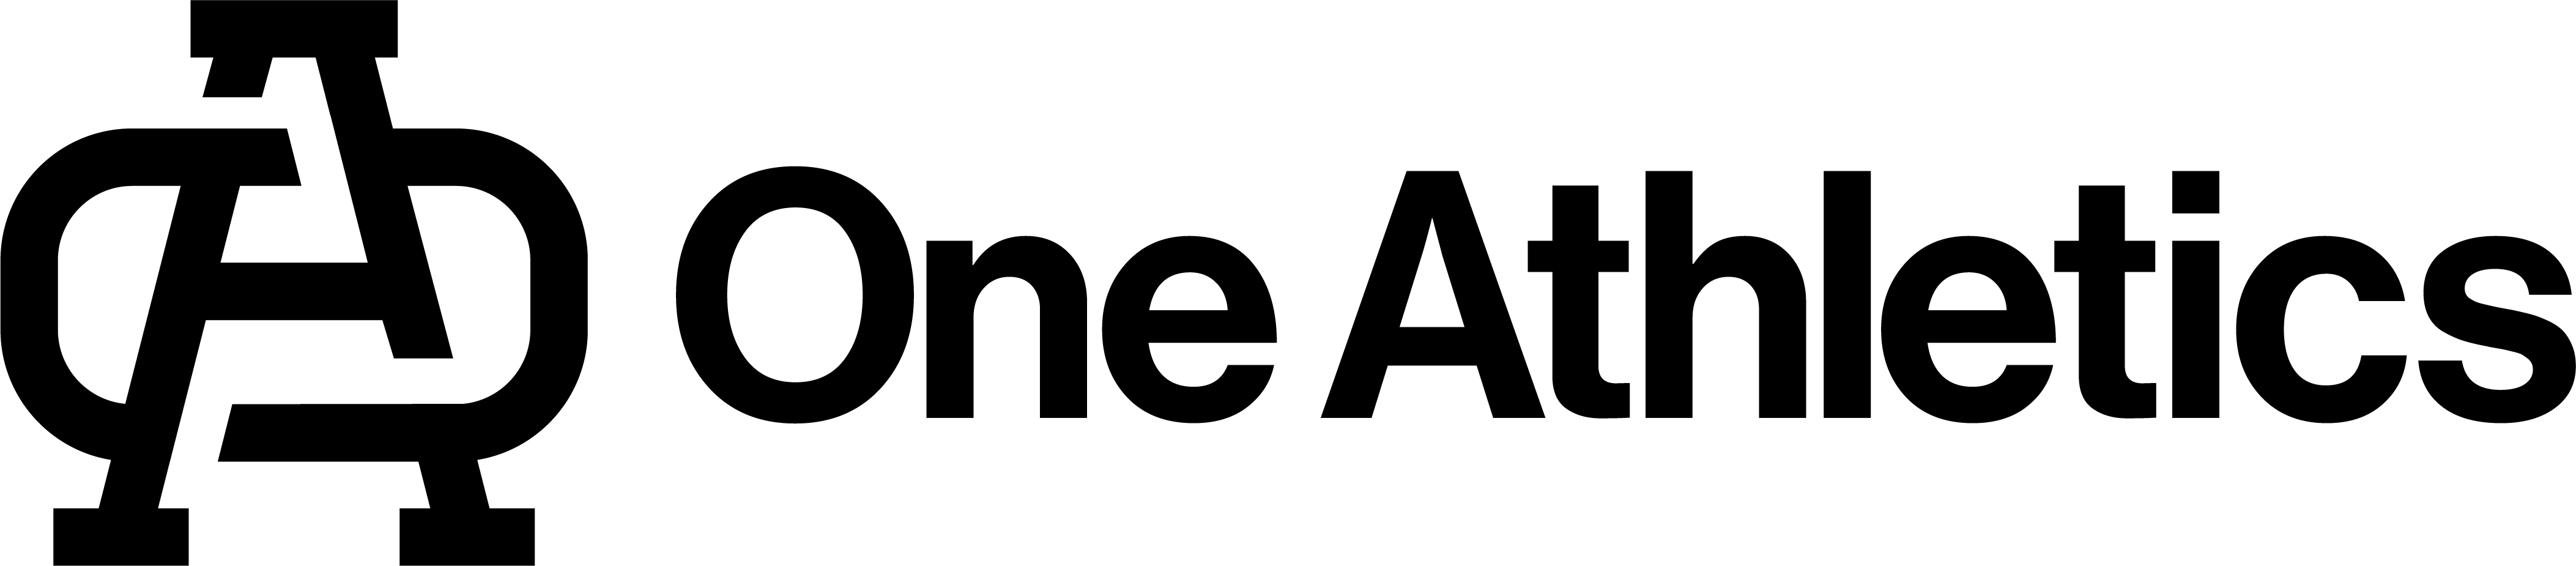 One Athletics logo